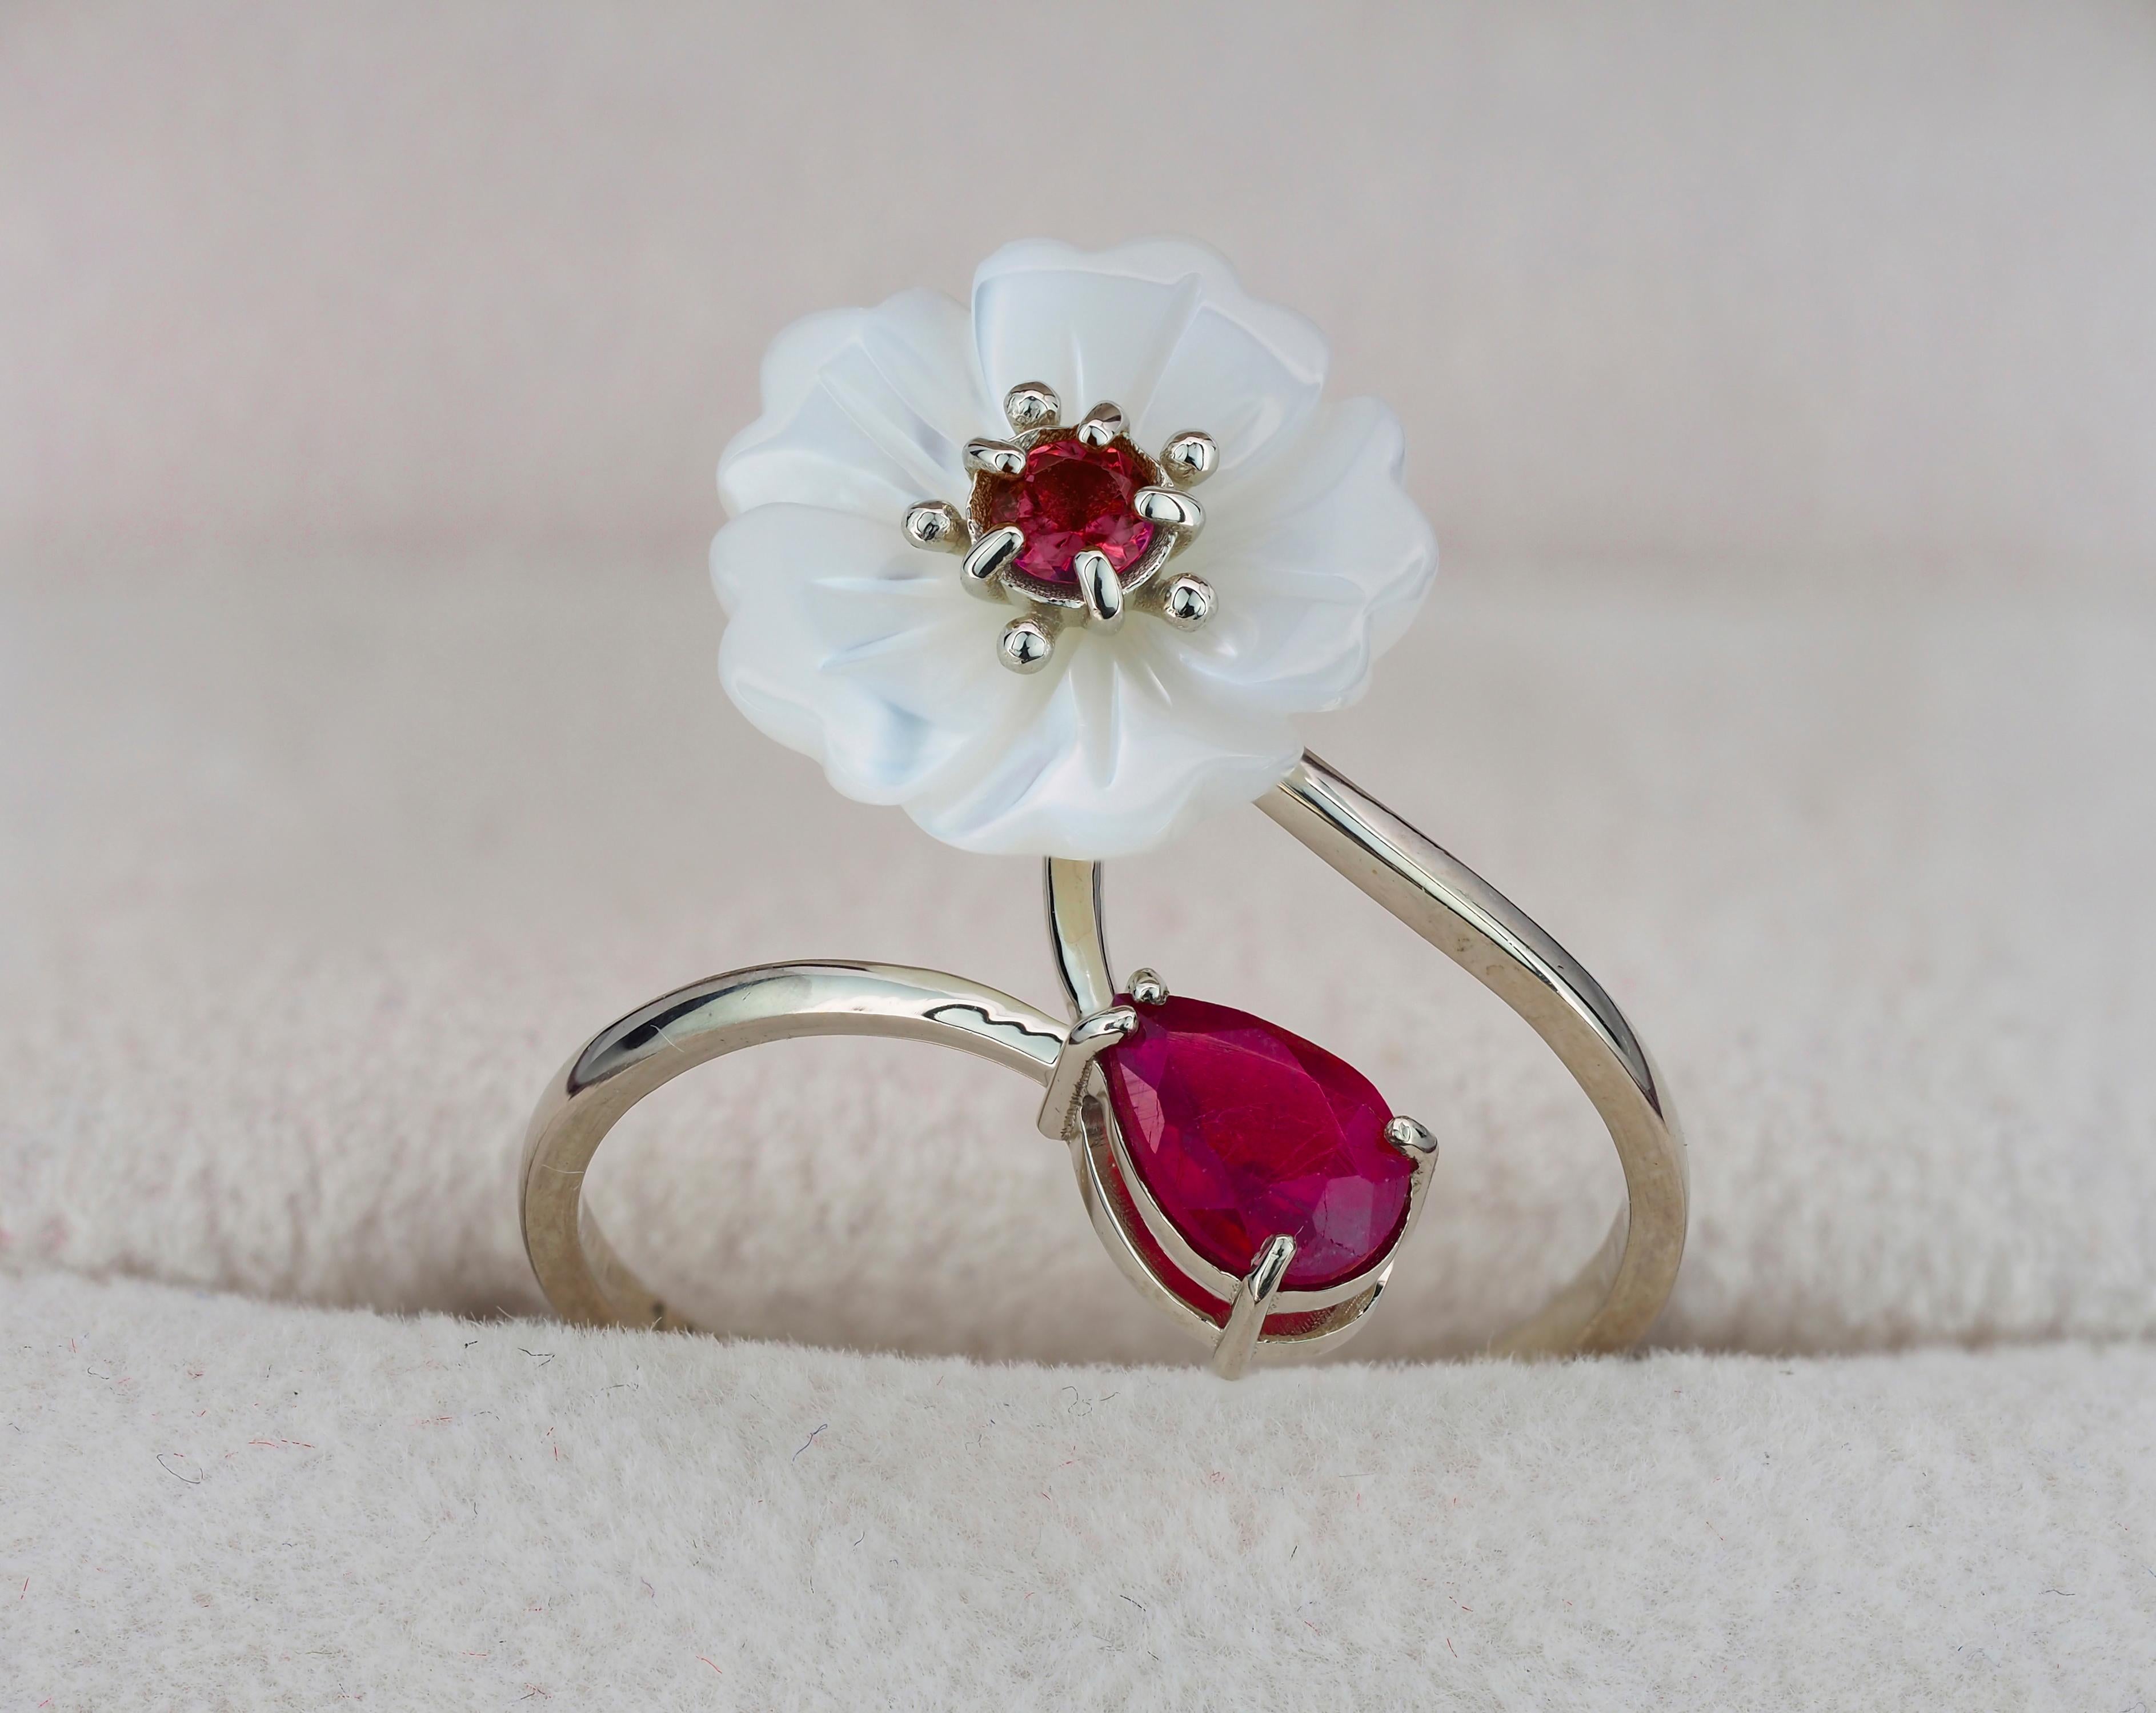 For Sale:  Carved Flower 14k ring with gemstones 3